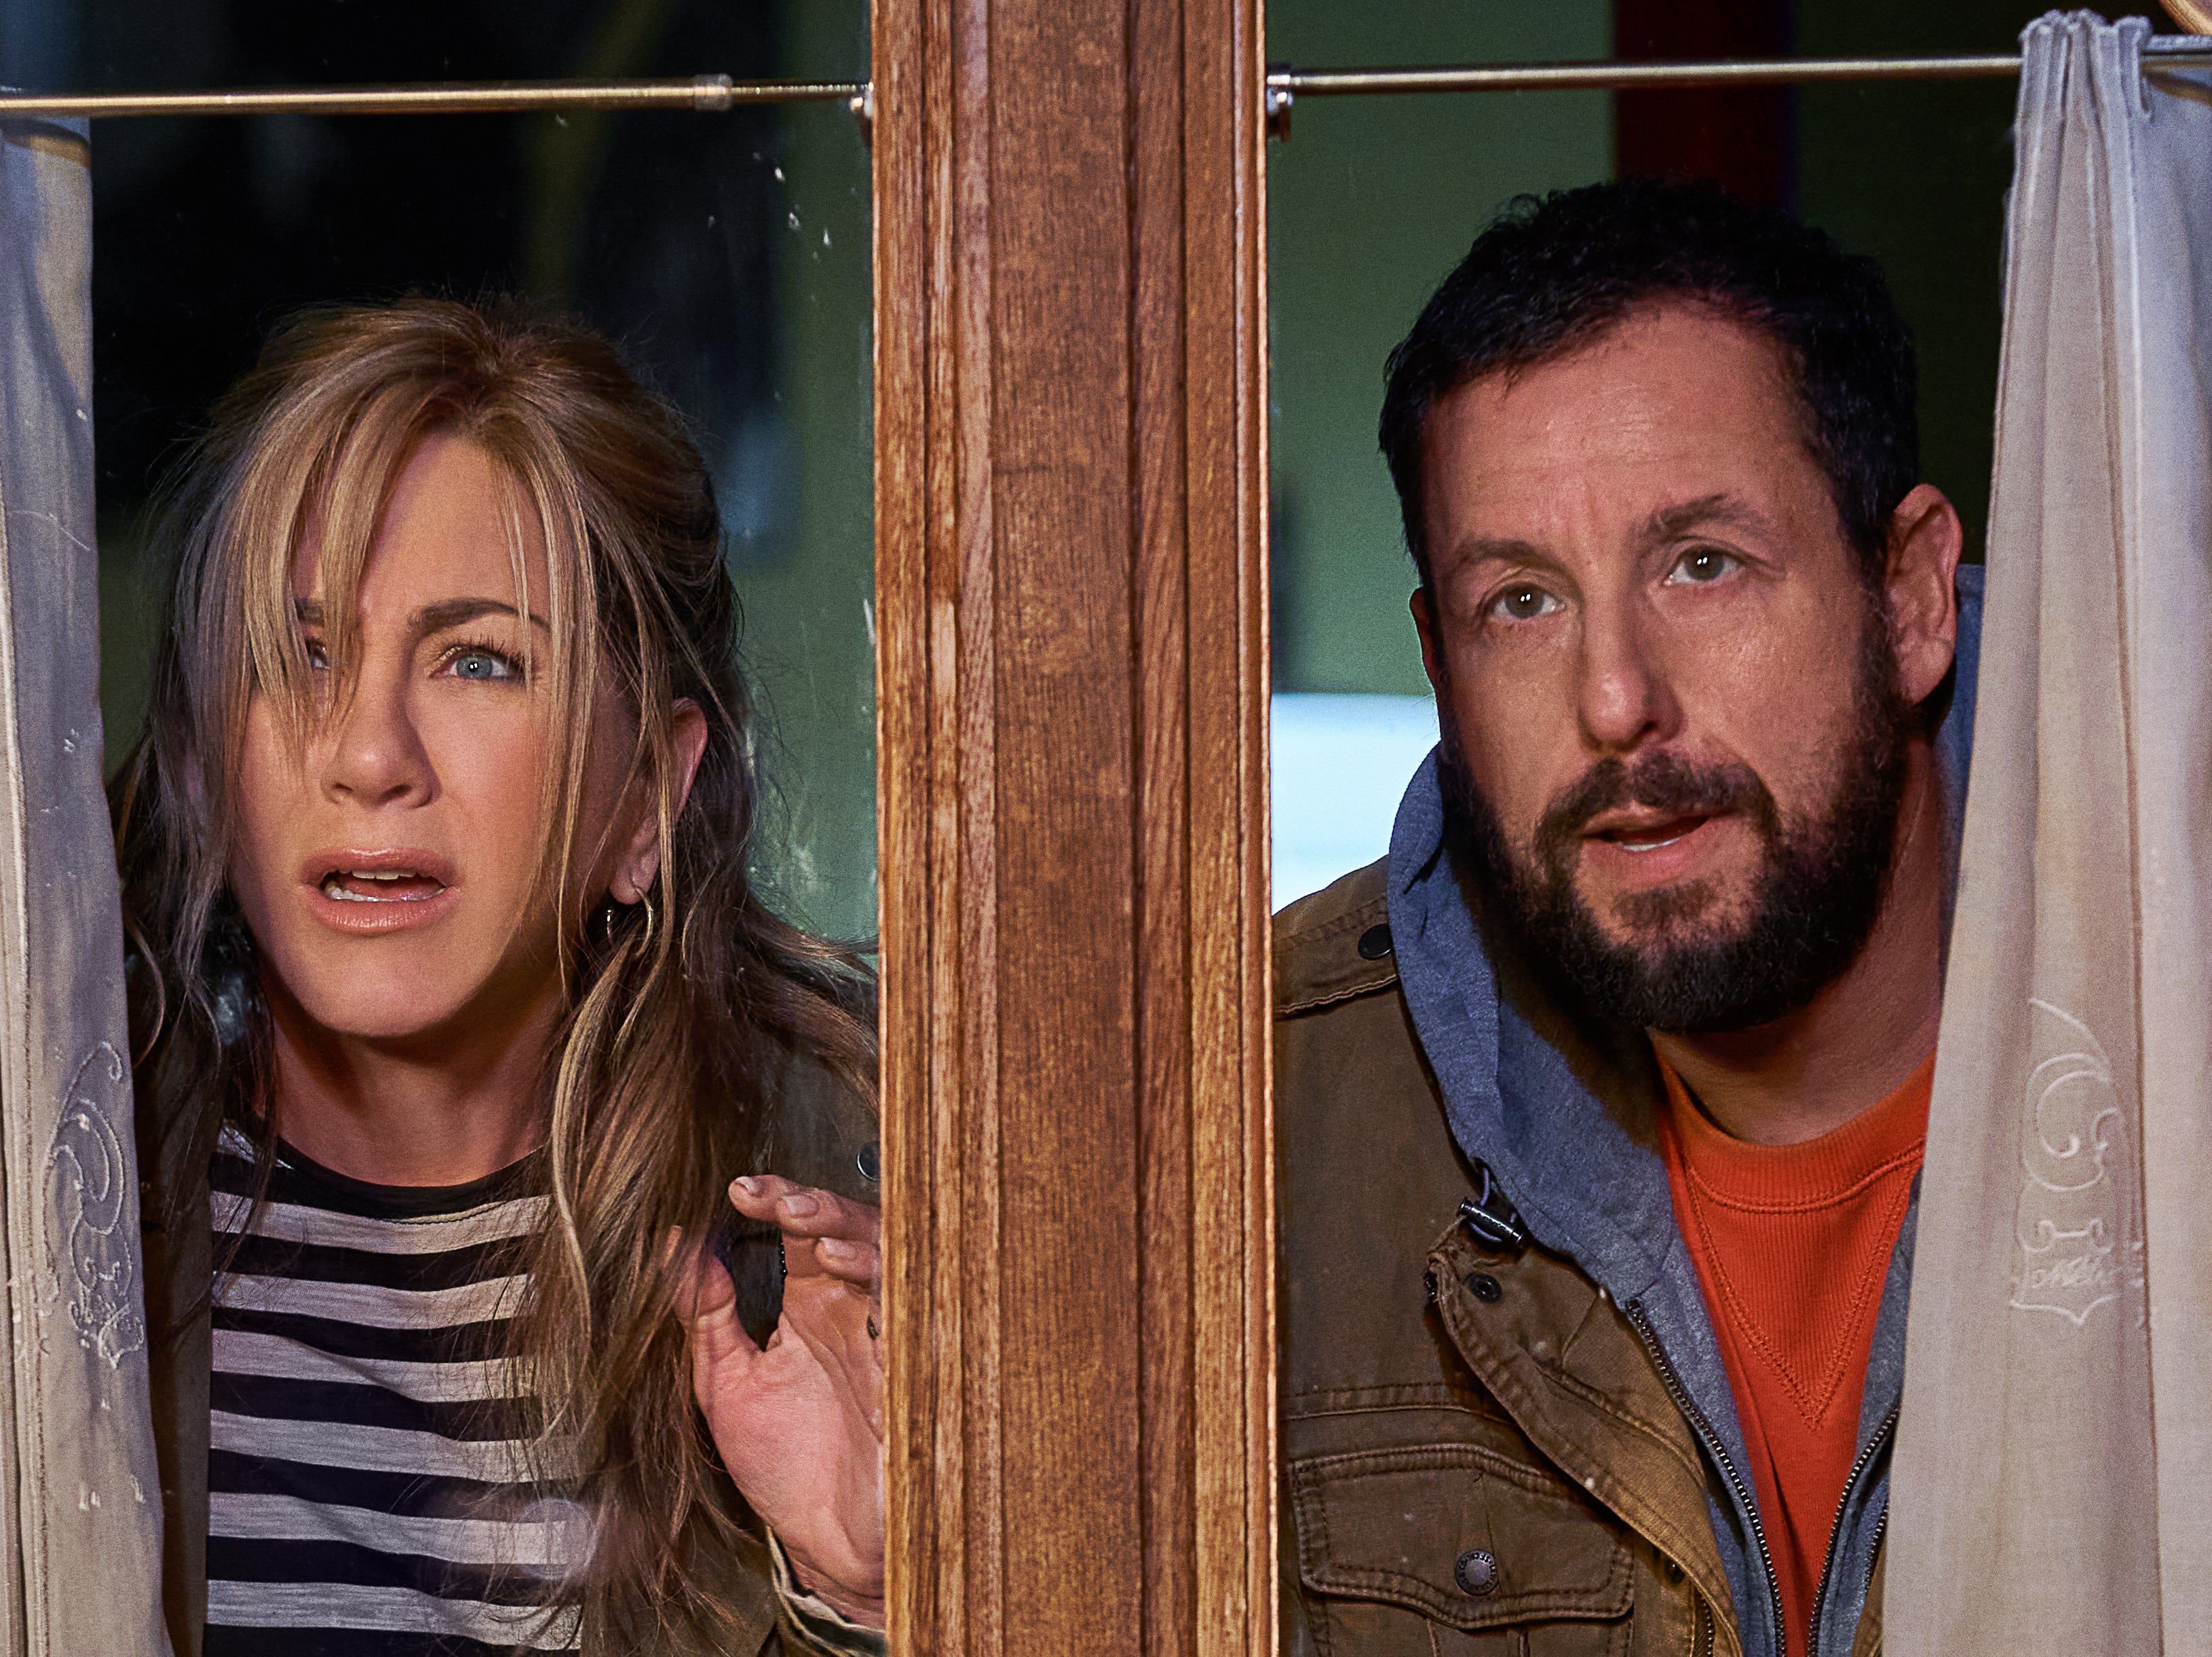 Jennifer Aniston and Adam Sandler in ‘Murder Mystery 2'